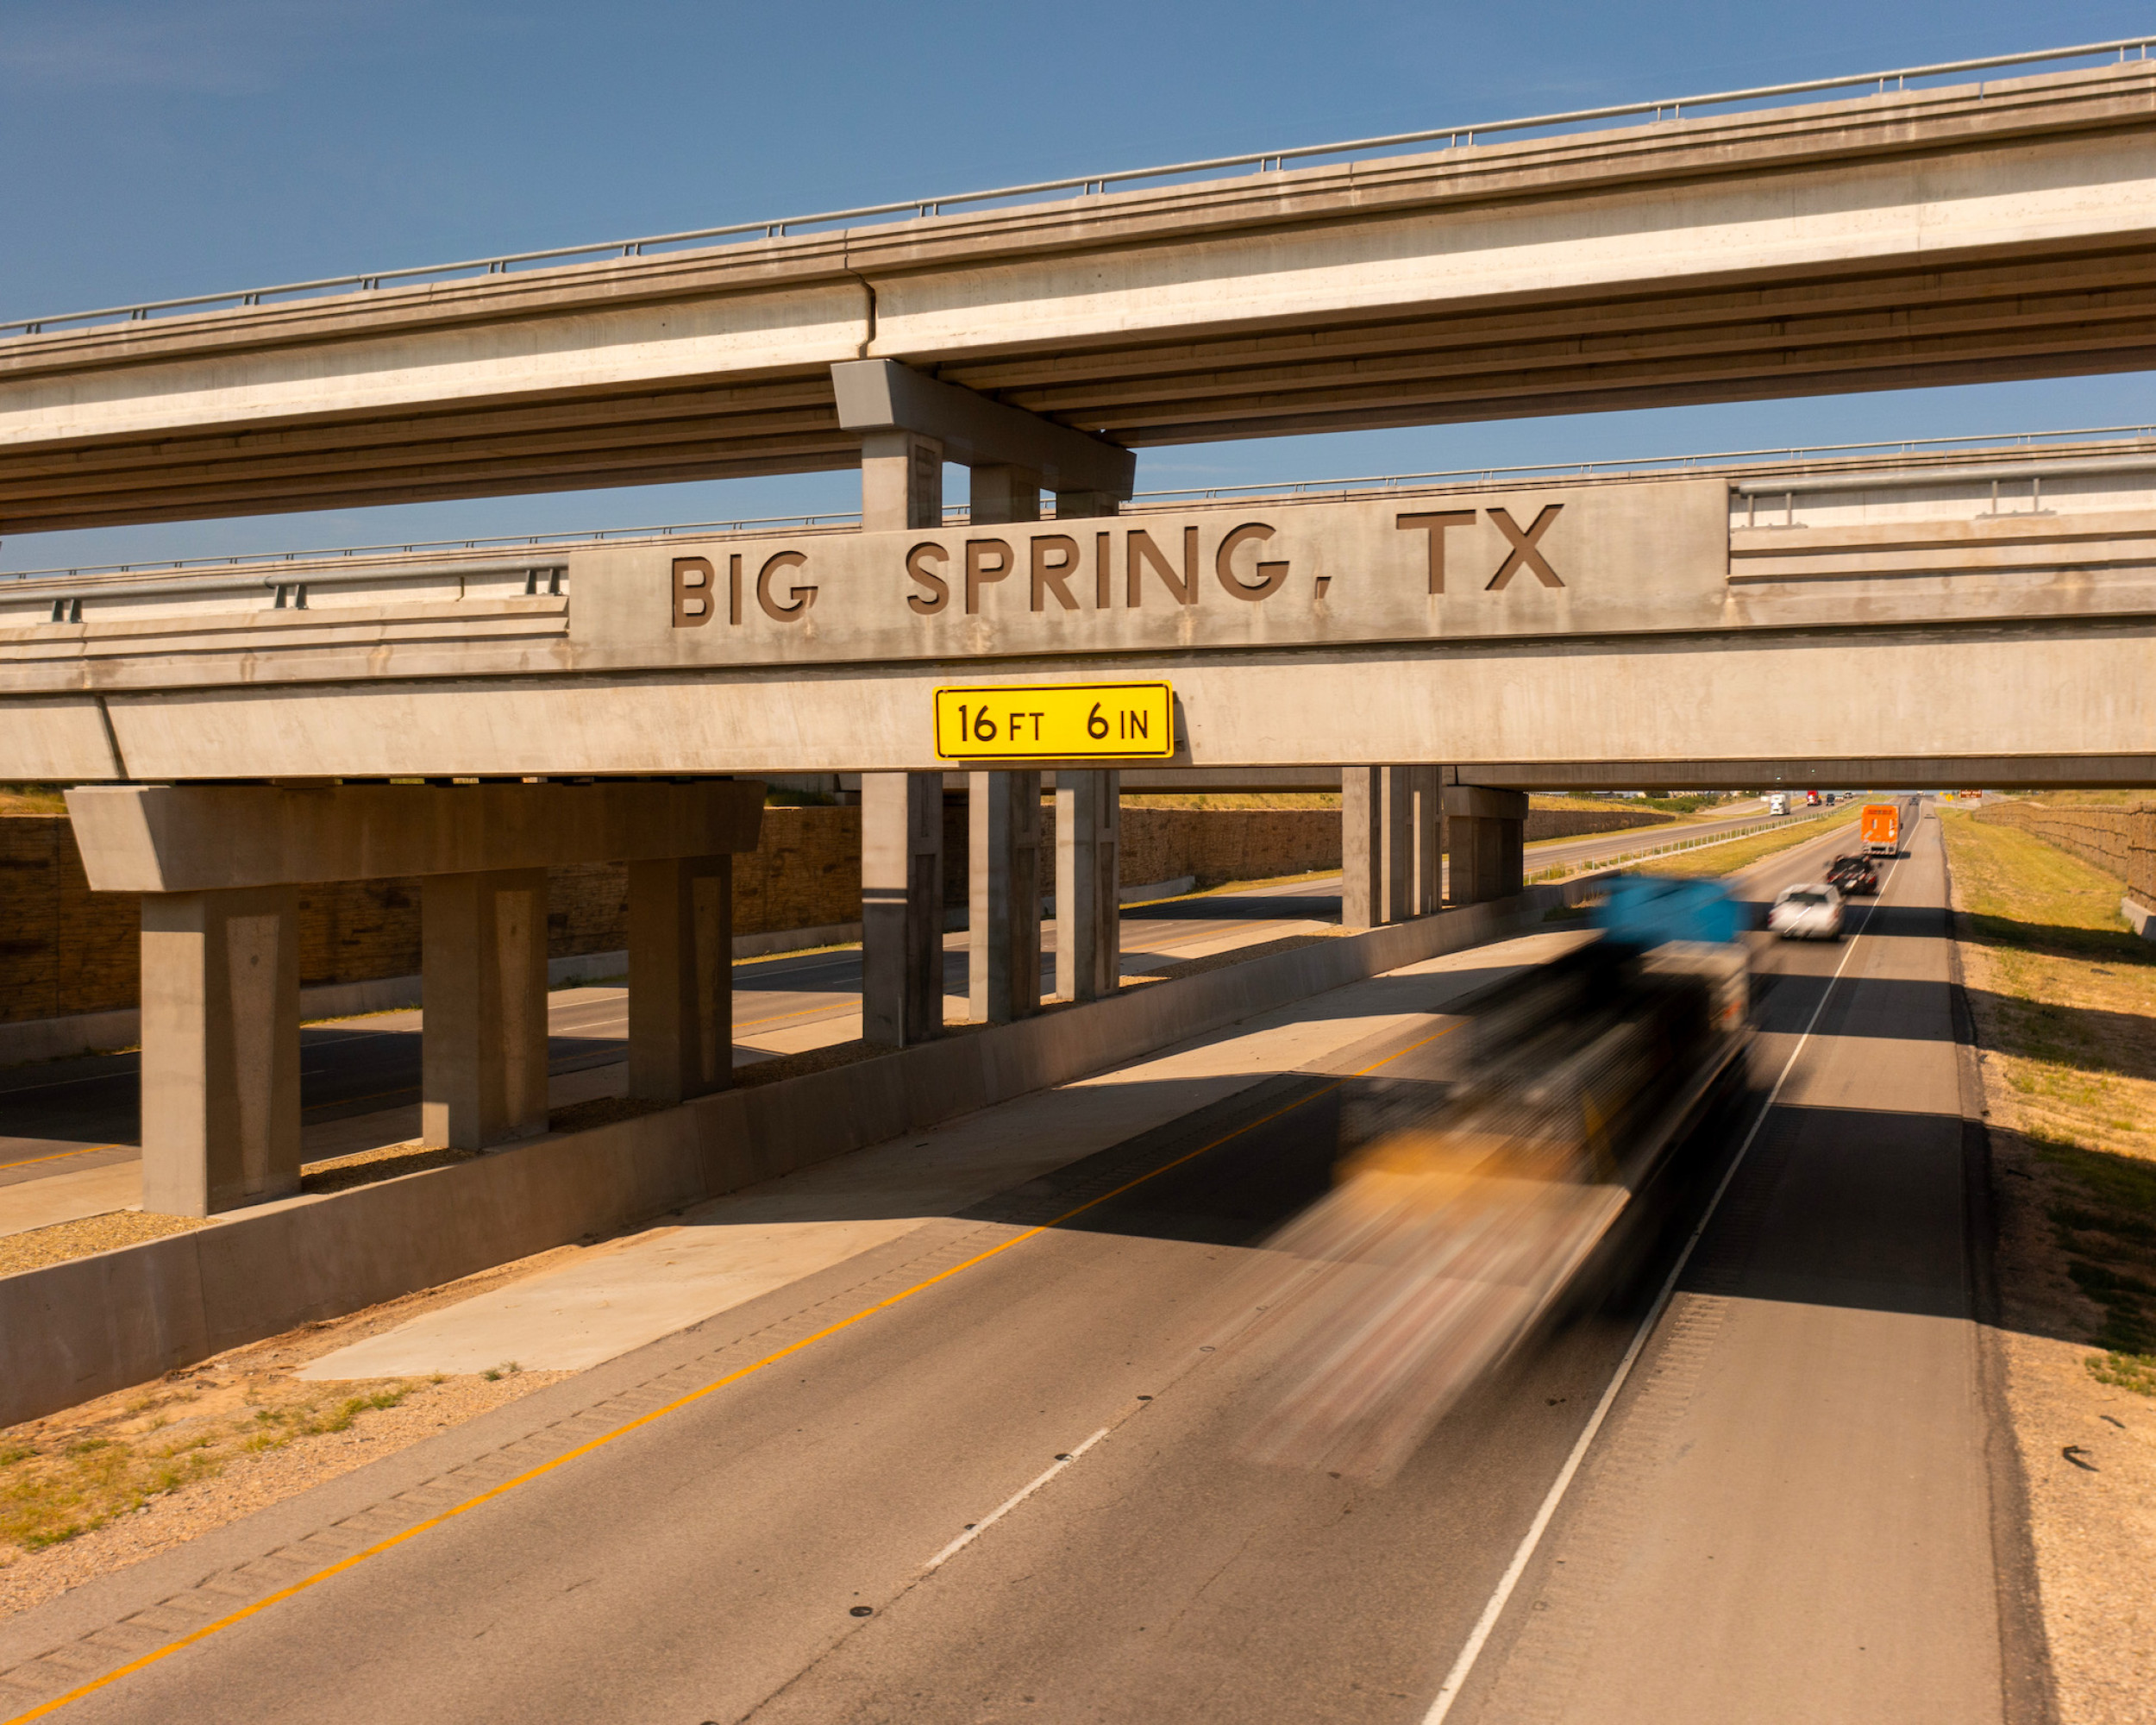 Big Spring sign of a bridge over a highway